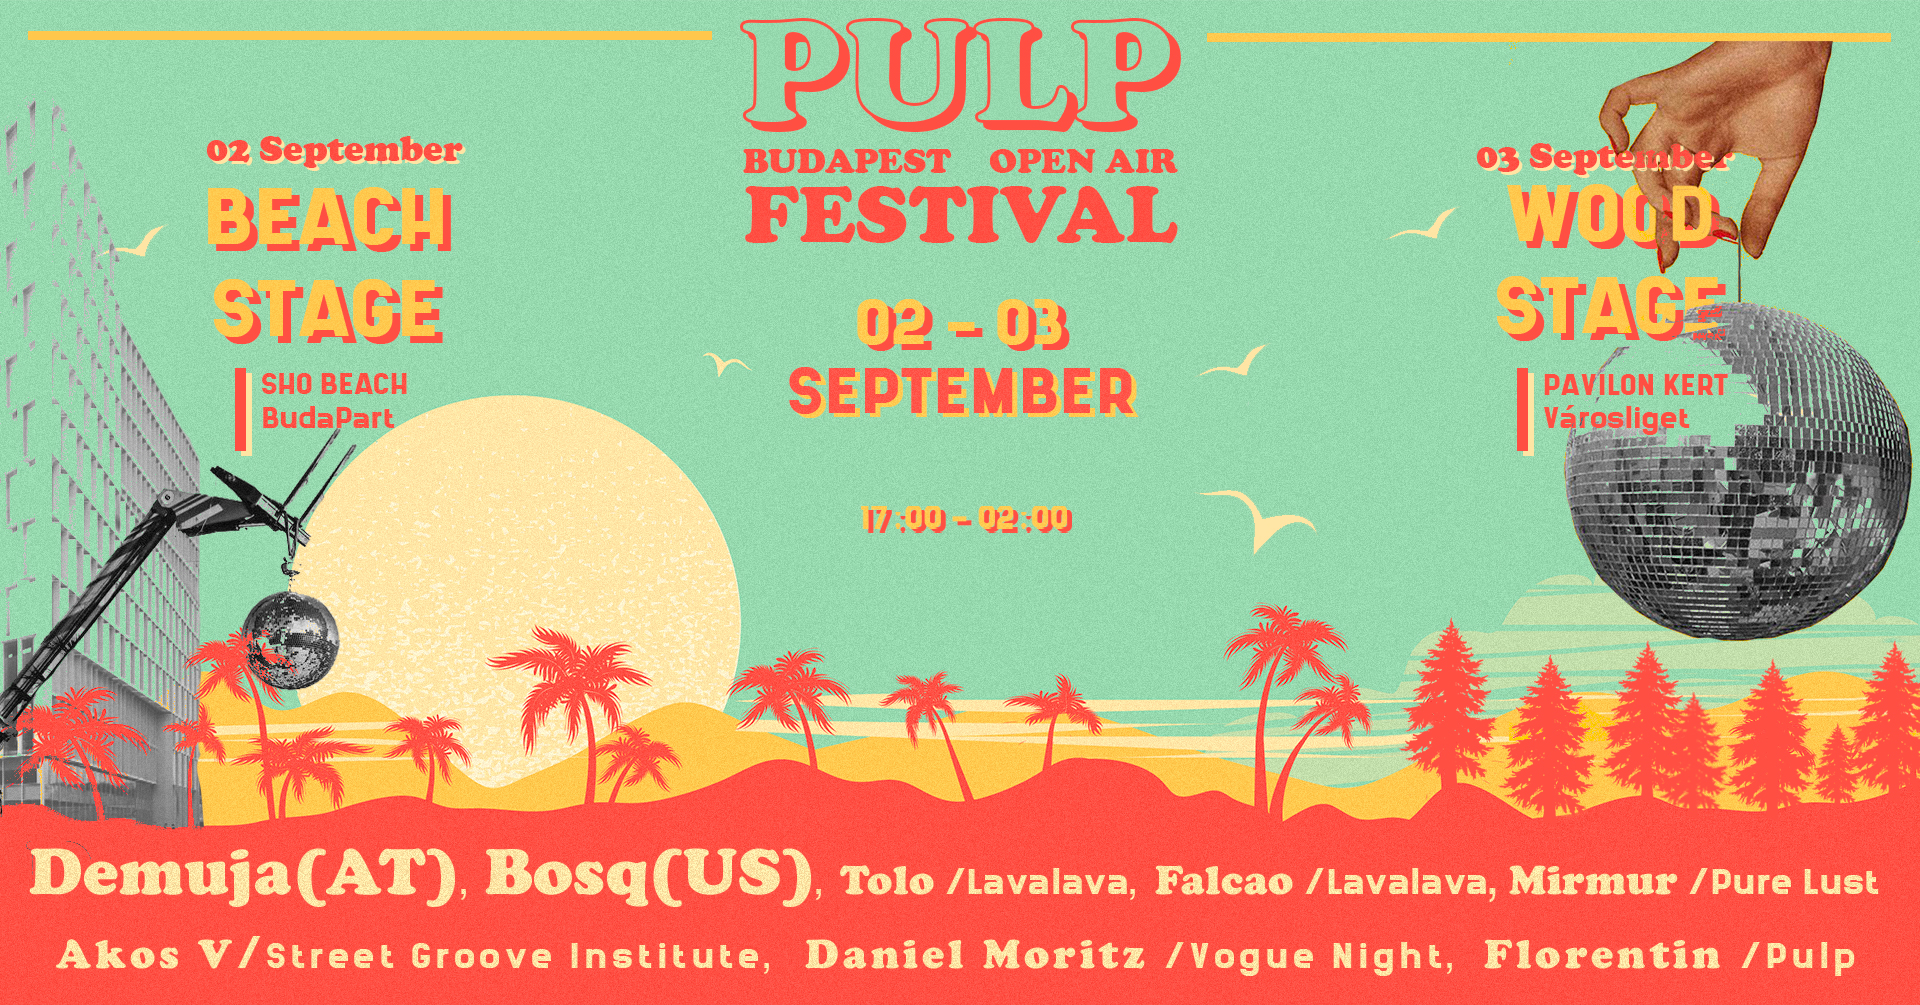 PULP Open Air Festival